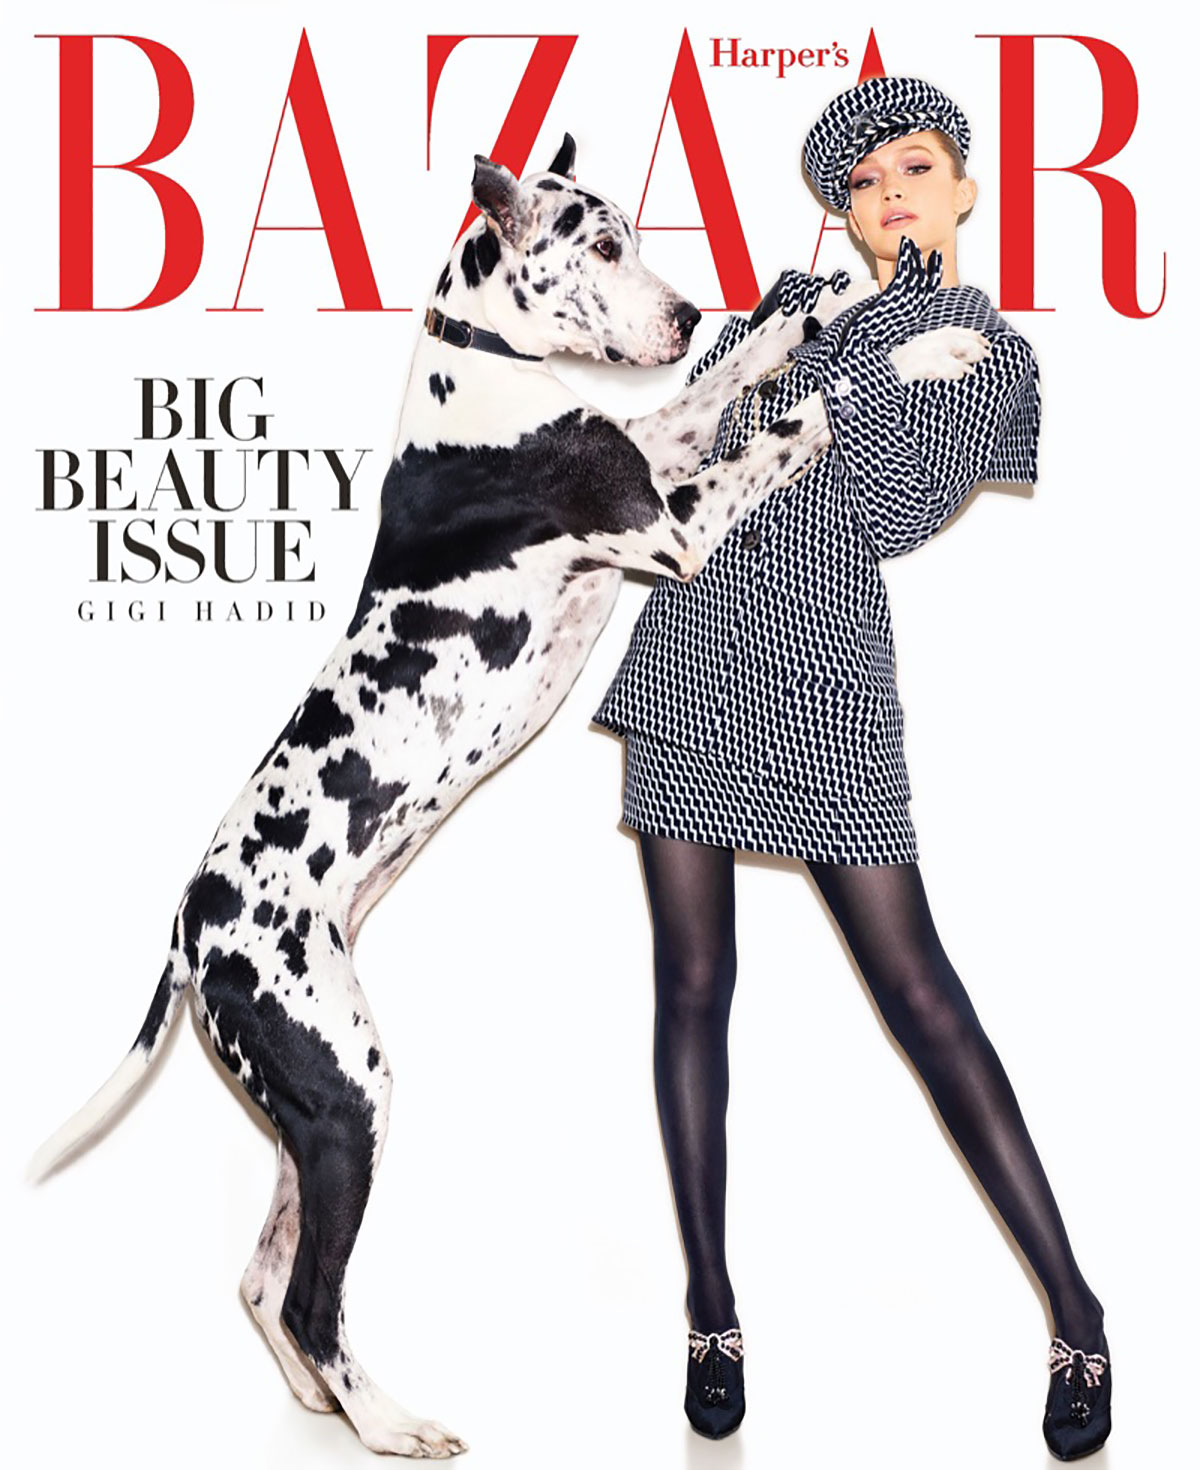 Harpers Bazaar, Gigi Hadid, Great Dane